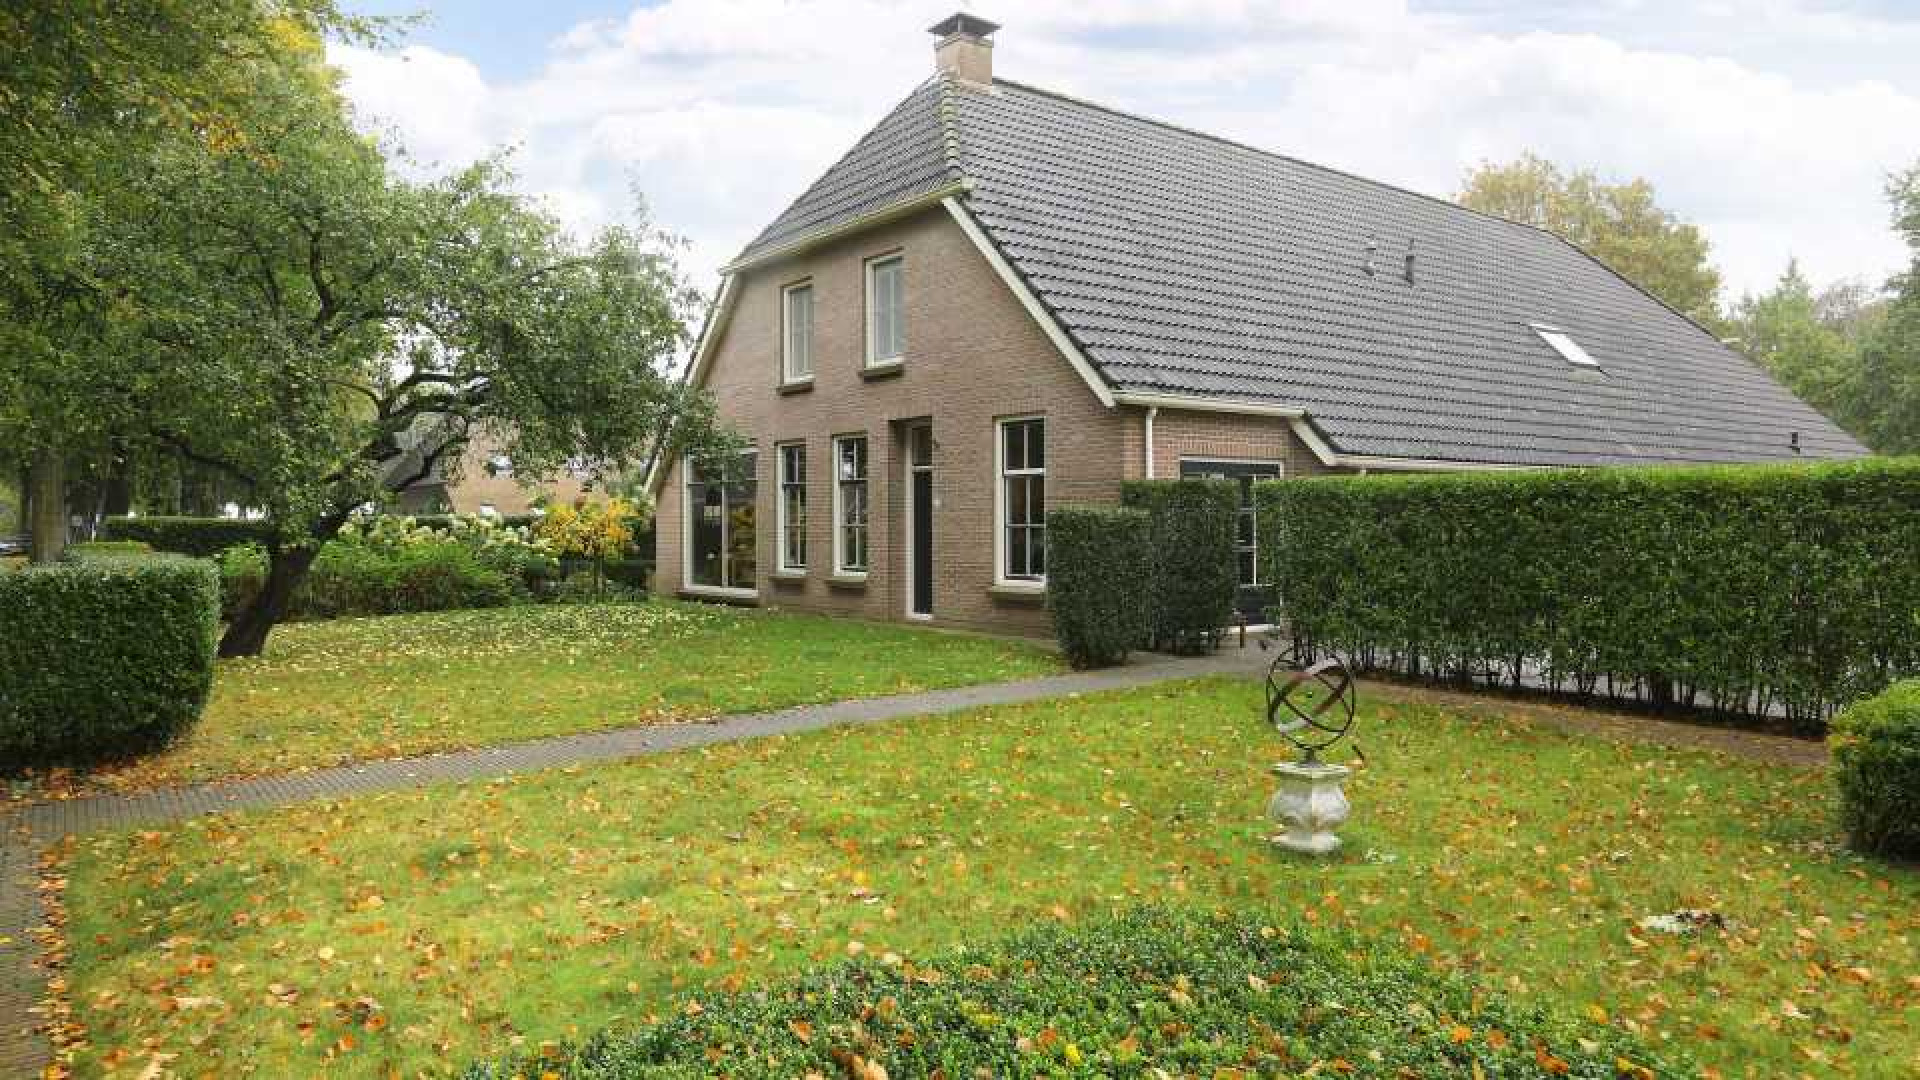 Binnen een week kocht en verkocht Johan Derksen deze woonboerderij.